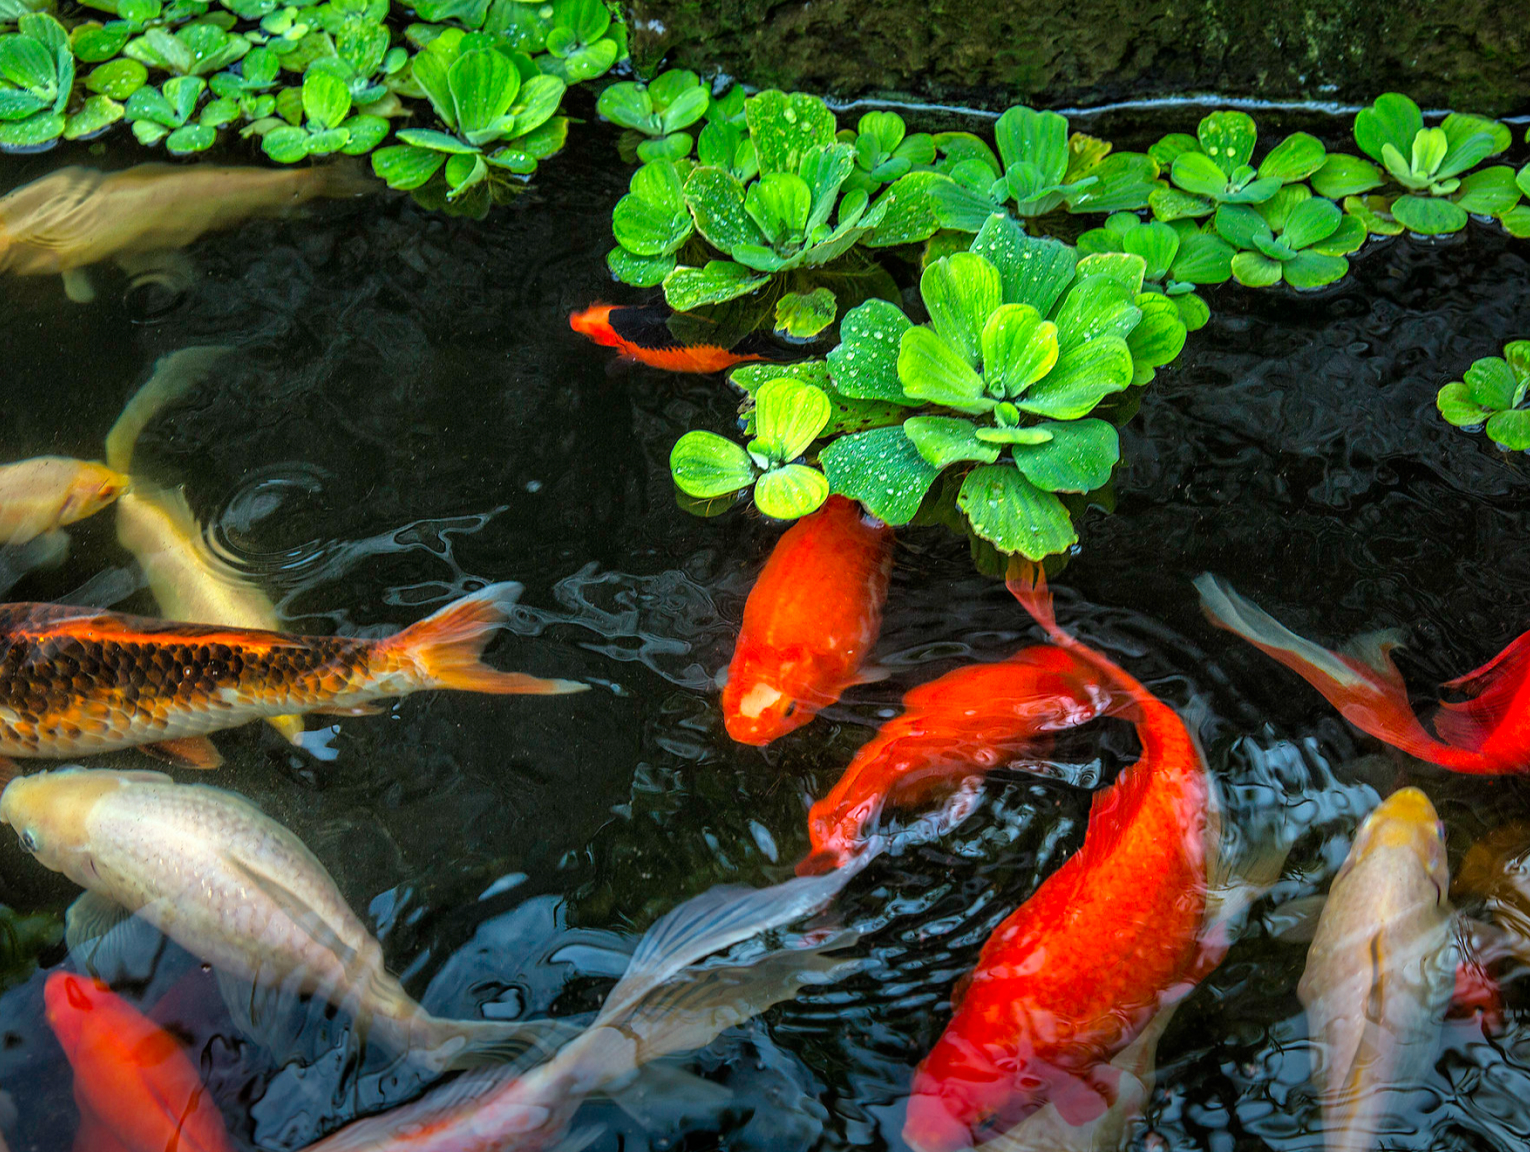 Orange, white, mottled koi and goldfish swimming in a dark pool under bright green plants